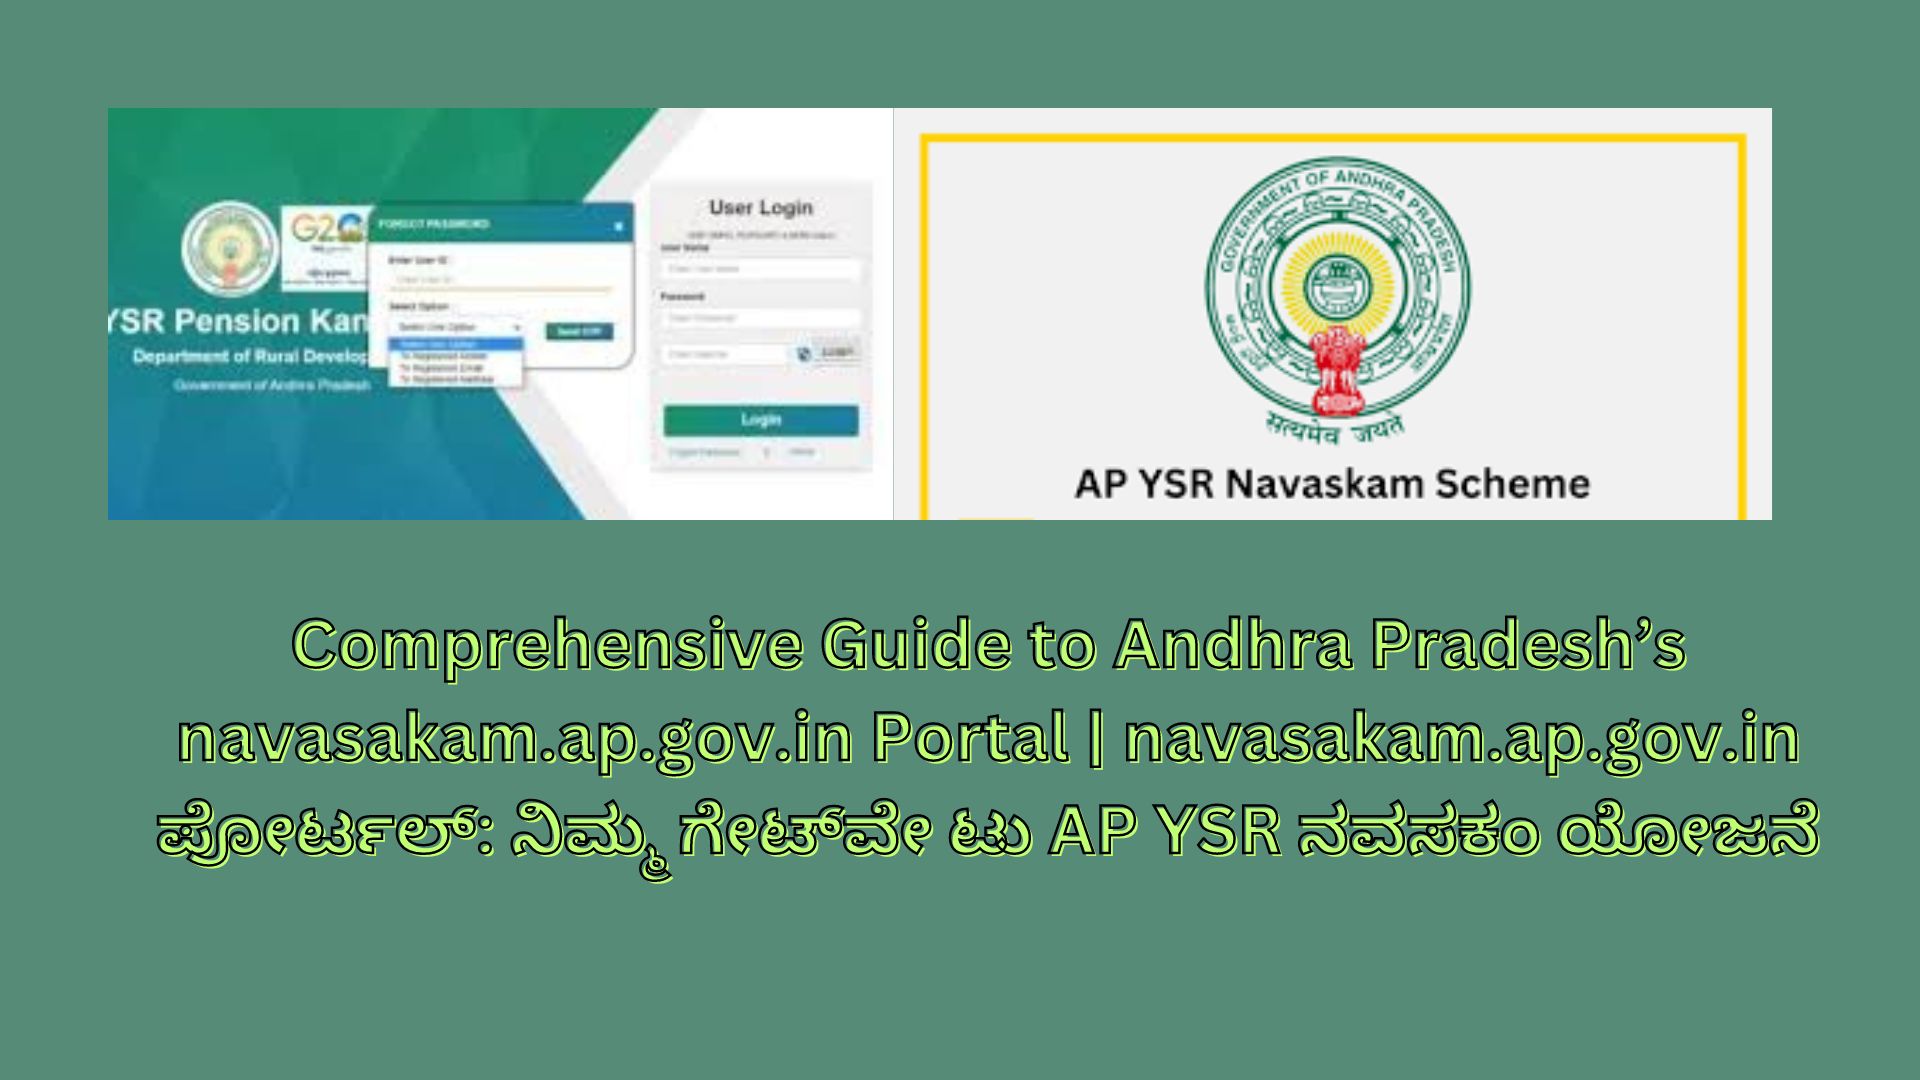 Comprehensive Guide to Andhra Pradesh’s navasakam.ap.gov.in Portal | navasakam.ap.gov.in ಪೋರ್ಟಲ್: ನಿಮ್ಮ ಗೇಟ್‌ವೇ ಟು AP YSR ನವಸಕಂ ಯೋಜನೆ